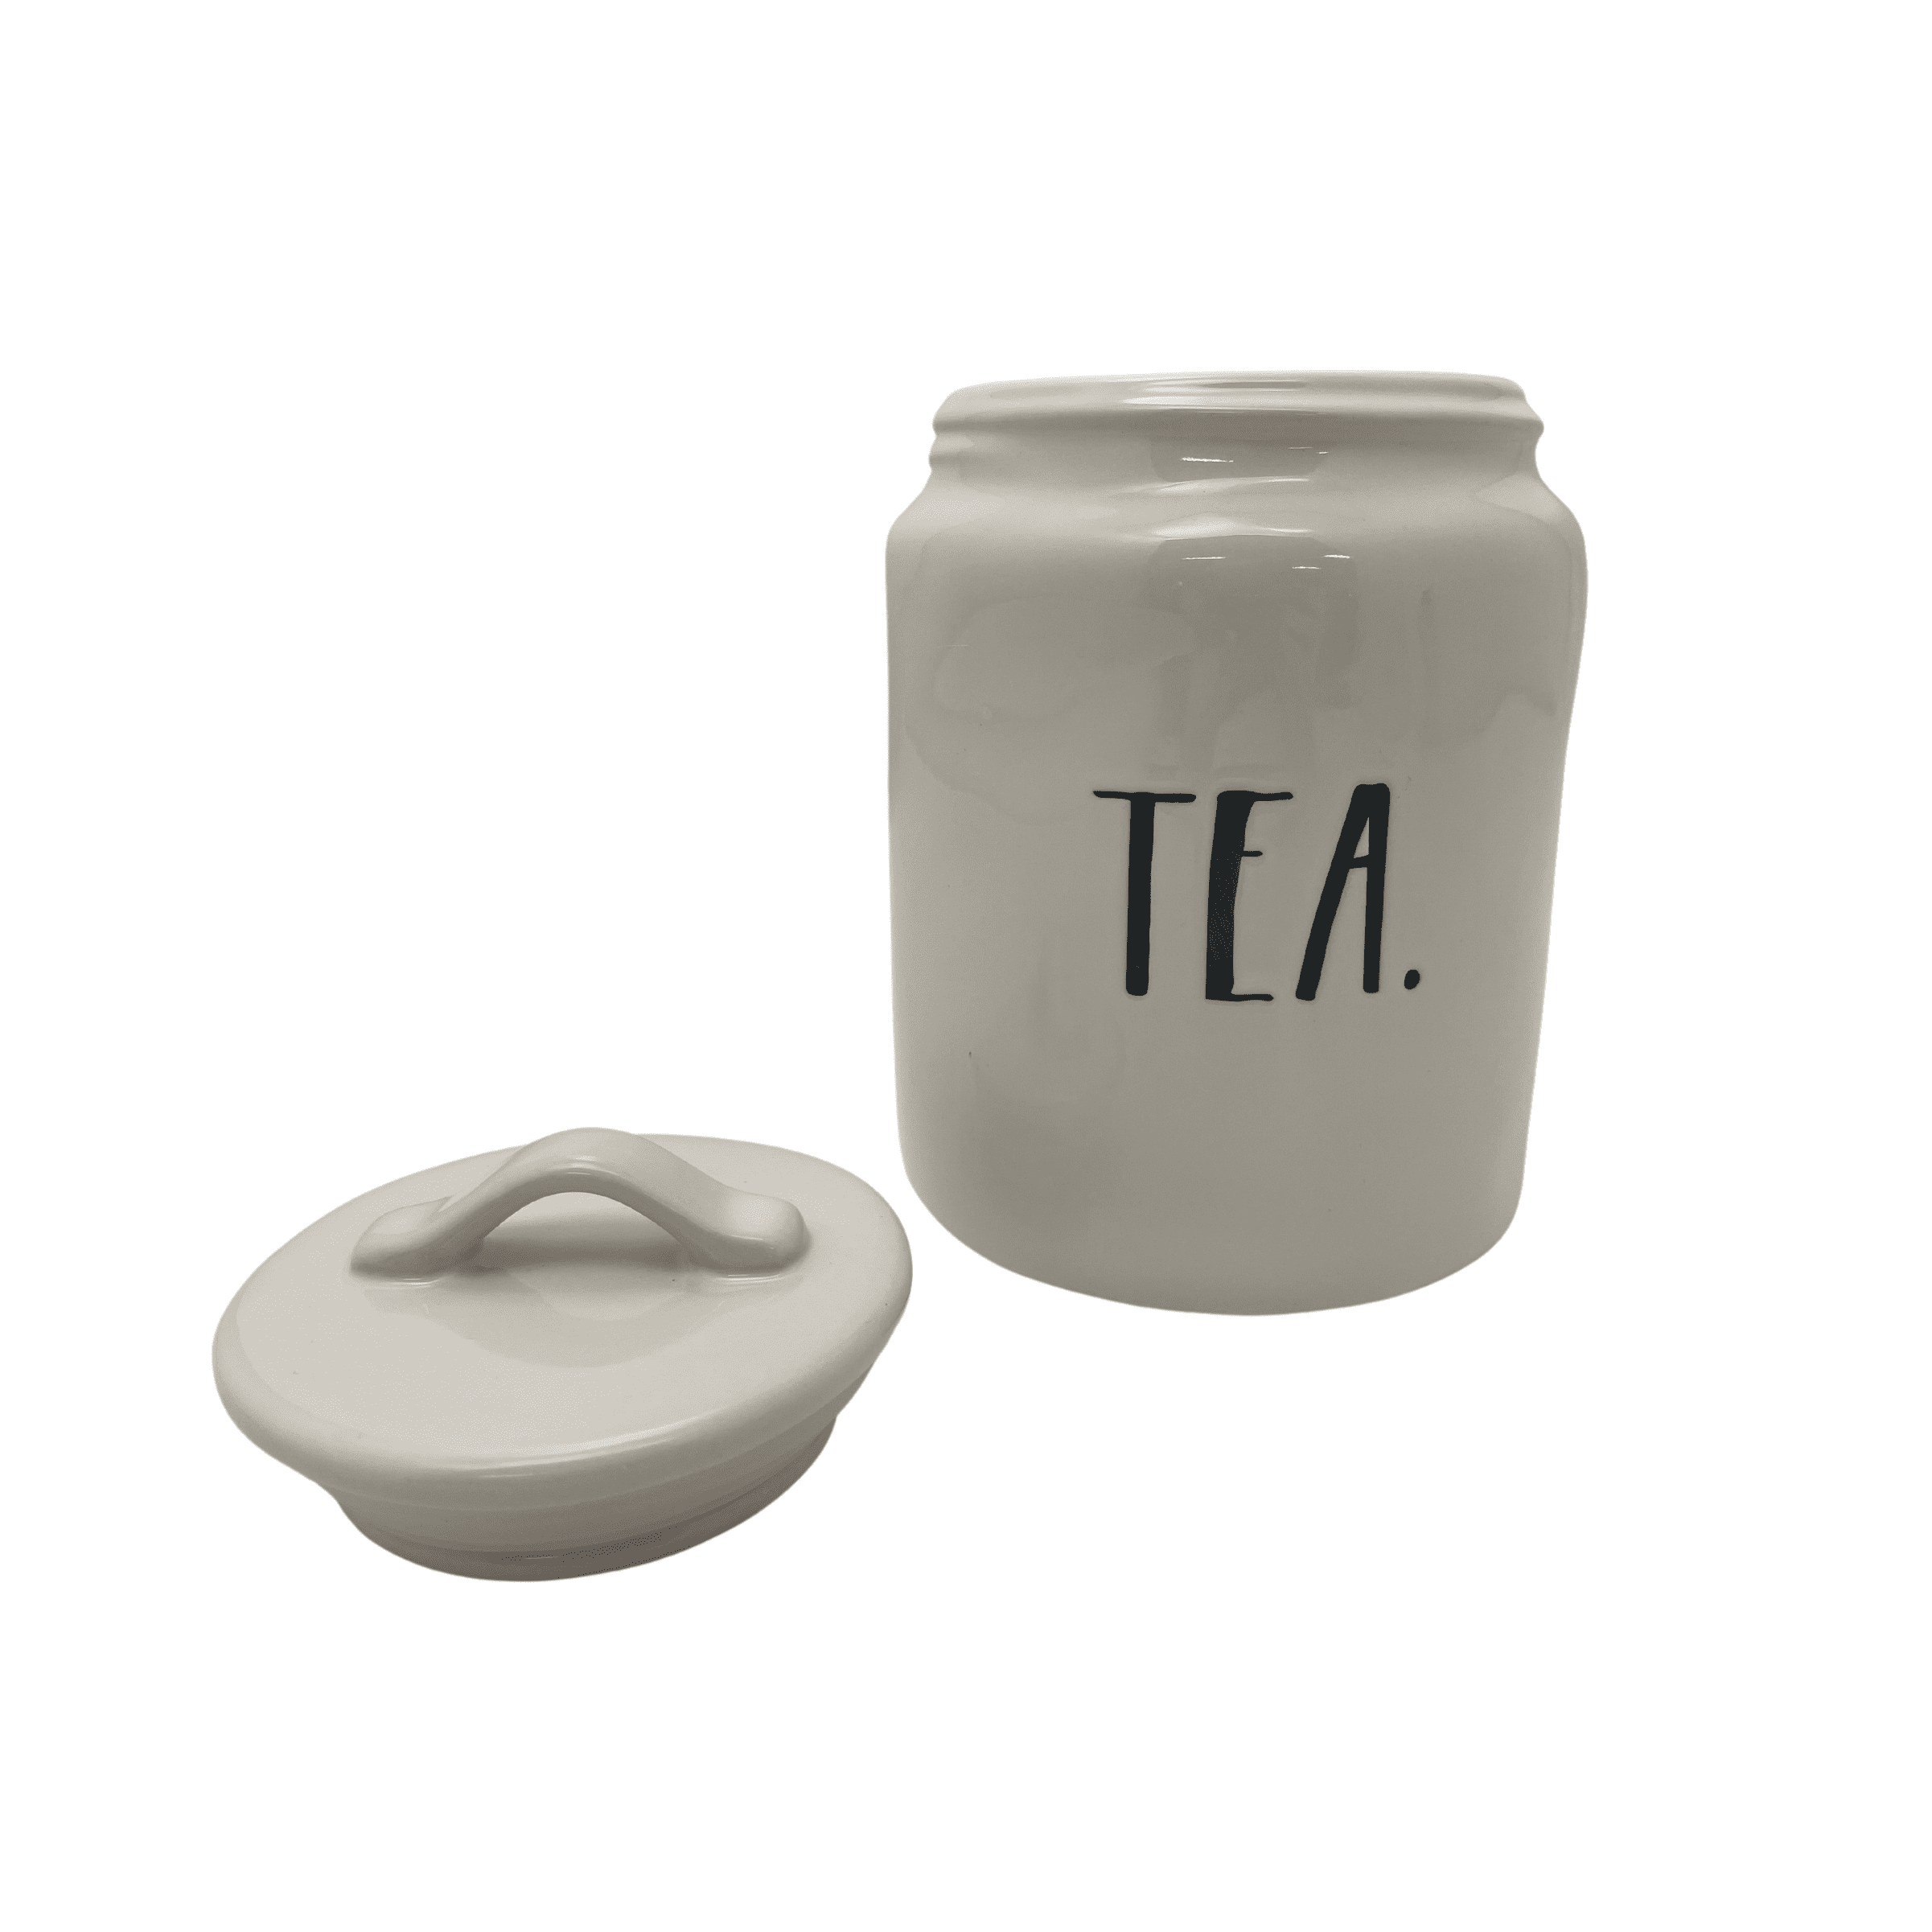 Rae Dunn "Tea." Canister / Stoneware Canister / Kitchen Decor / White